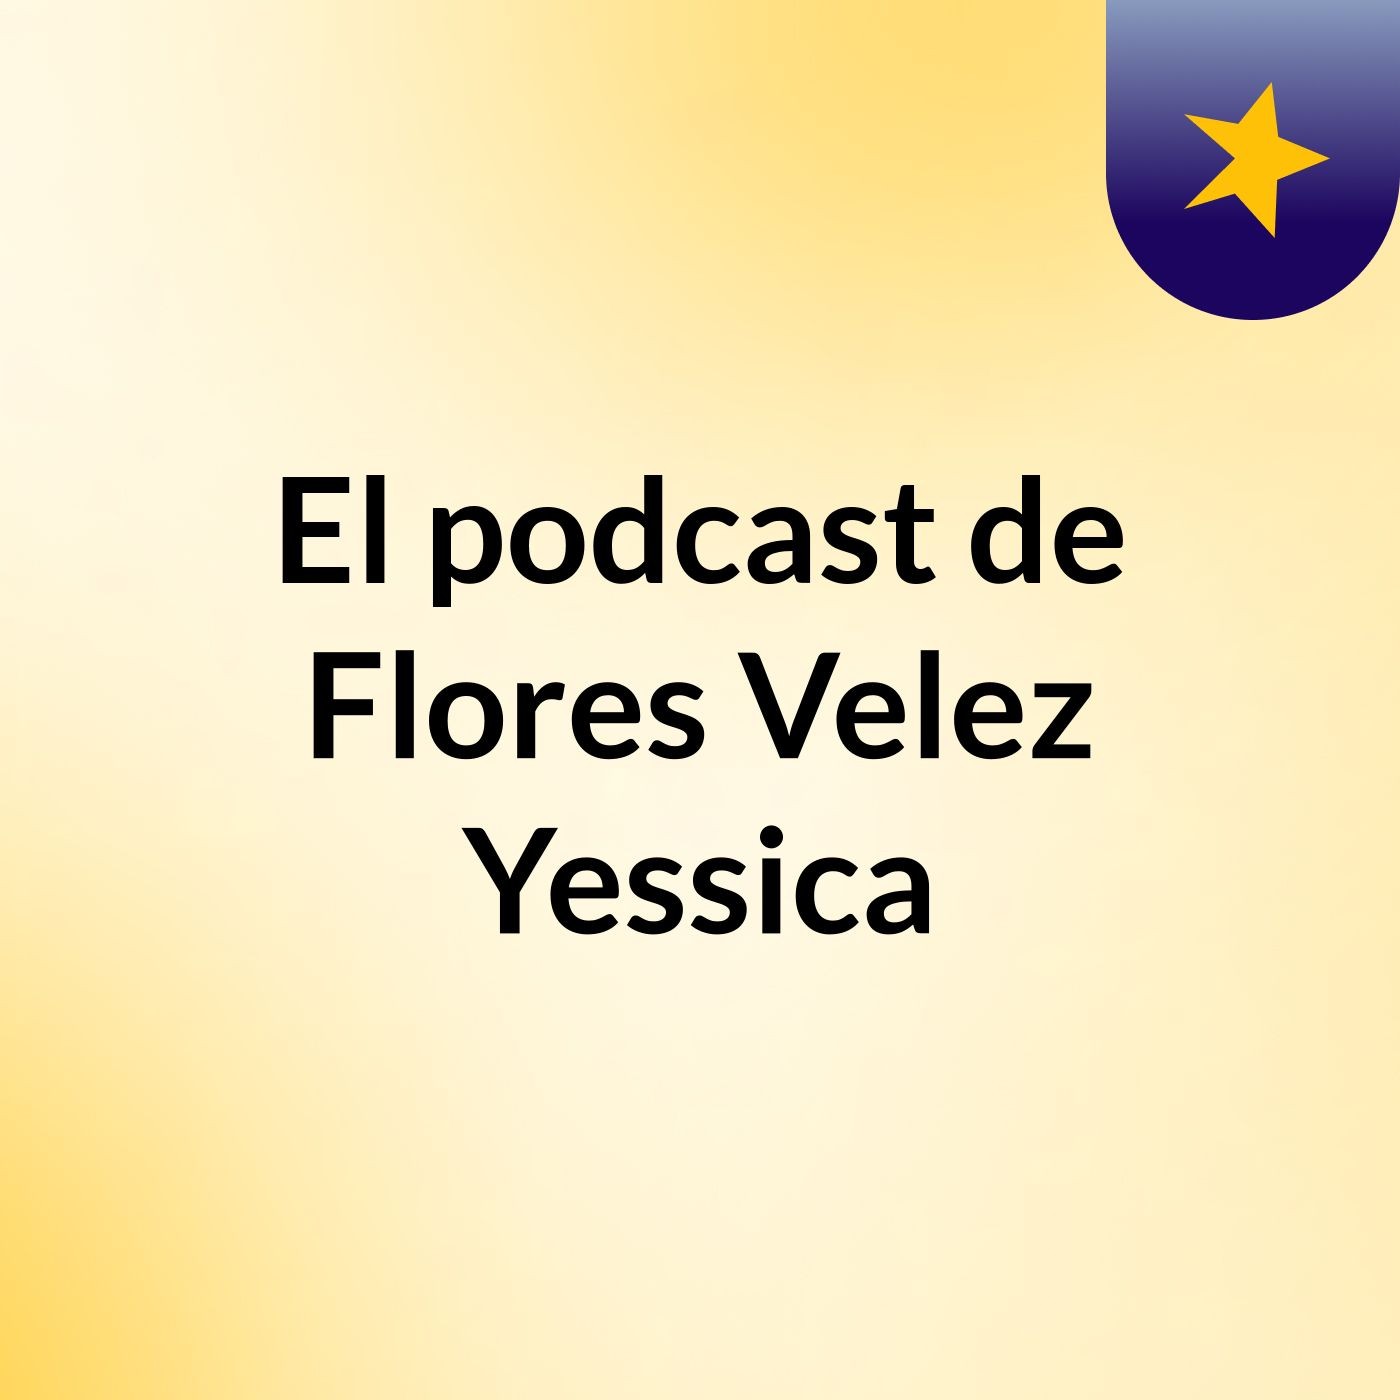 El podcast de Flores Velez Yessica